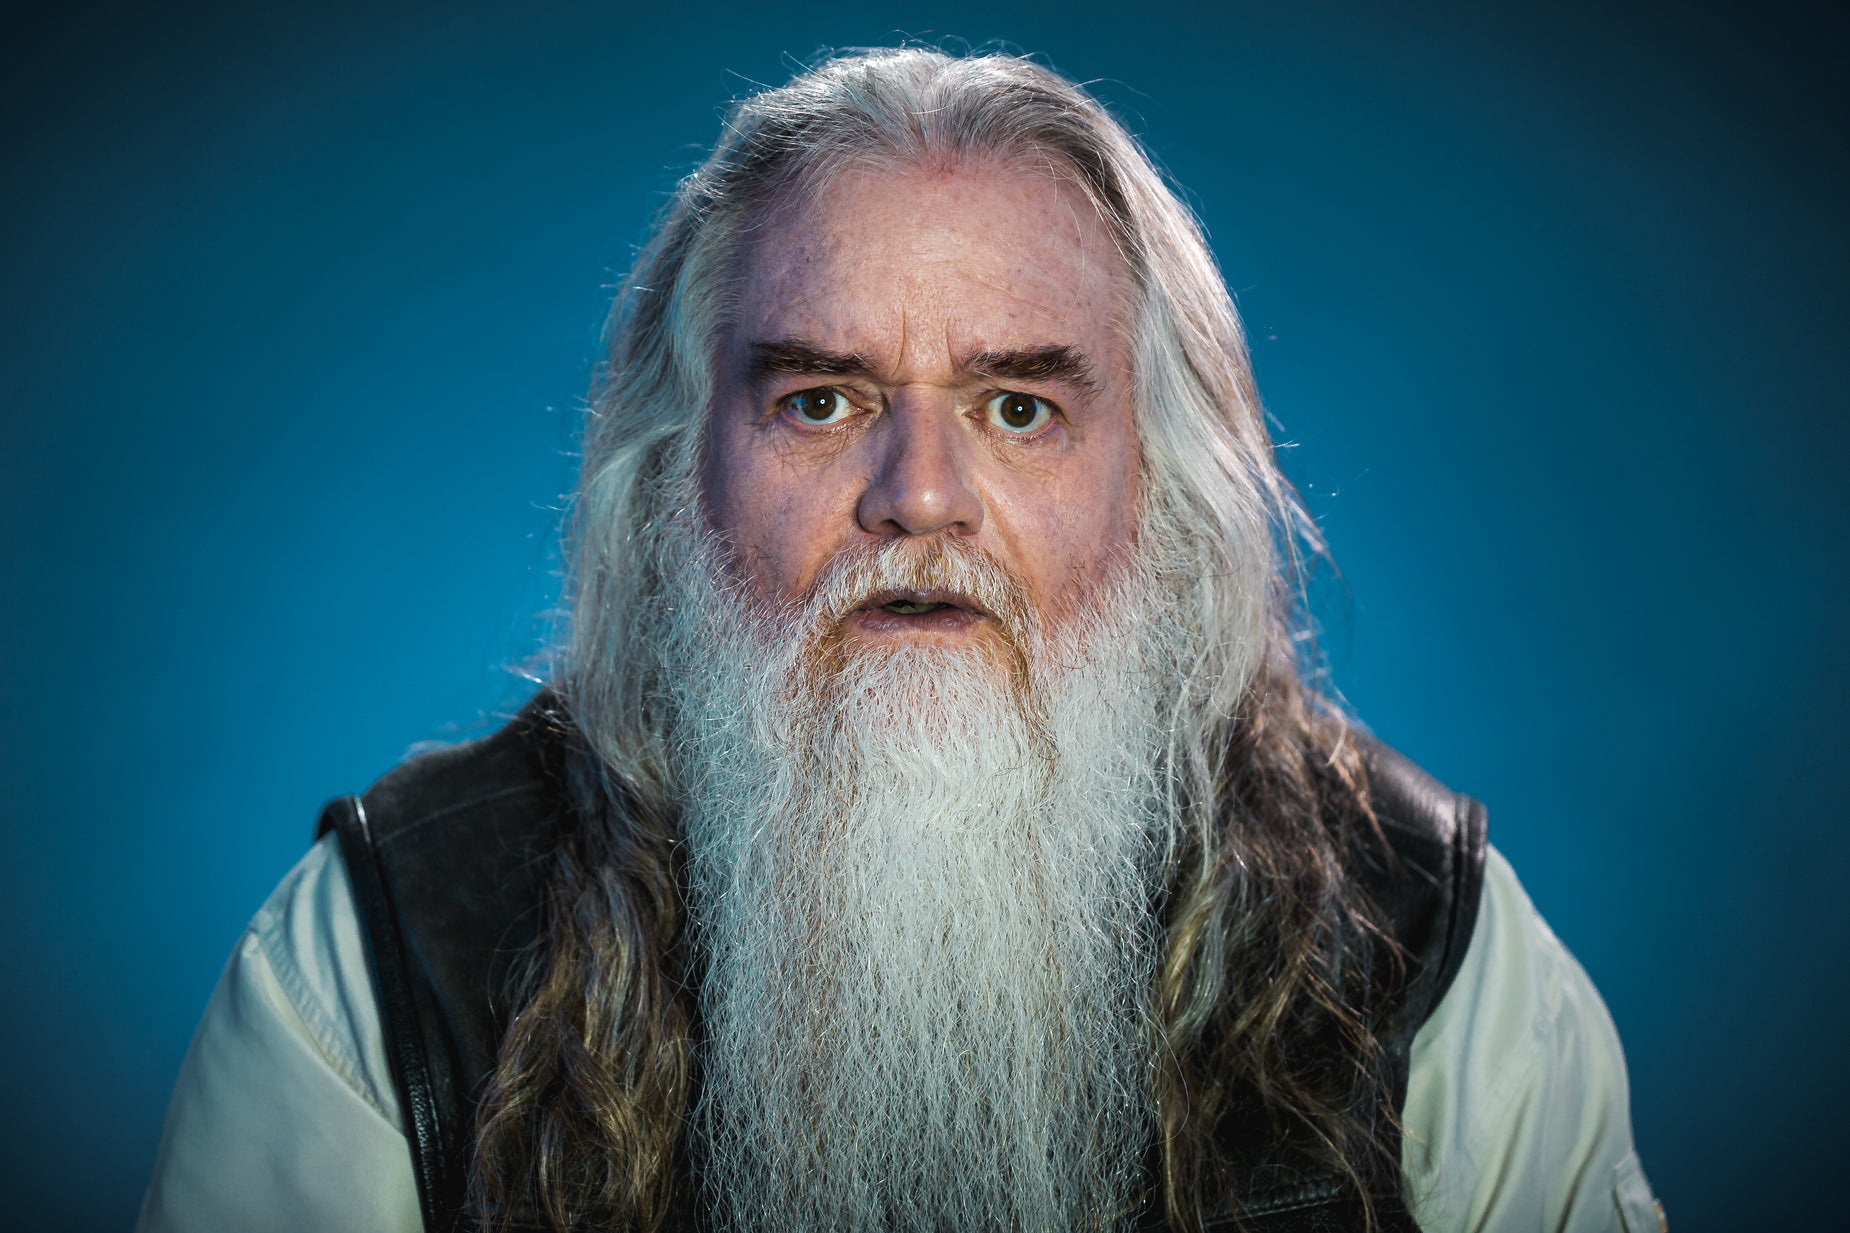 a portrait of an older man with a long beard